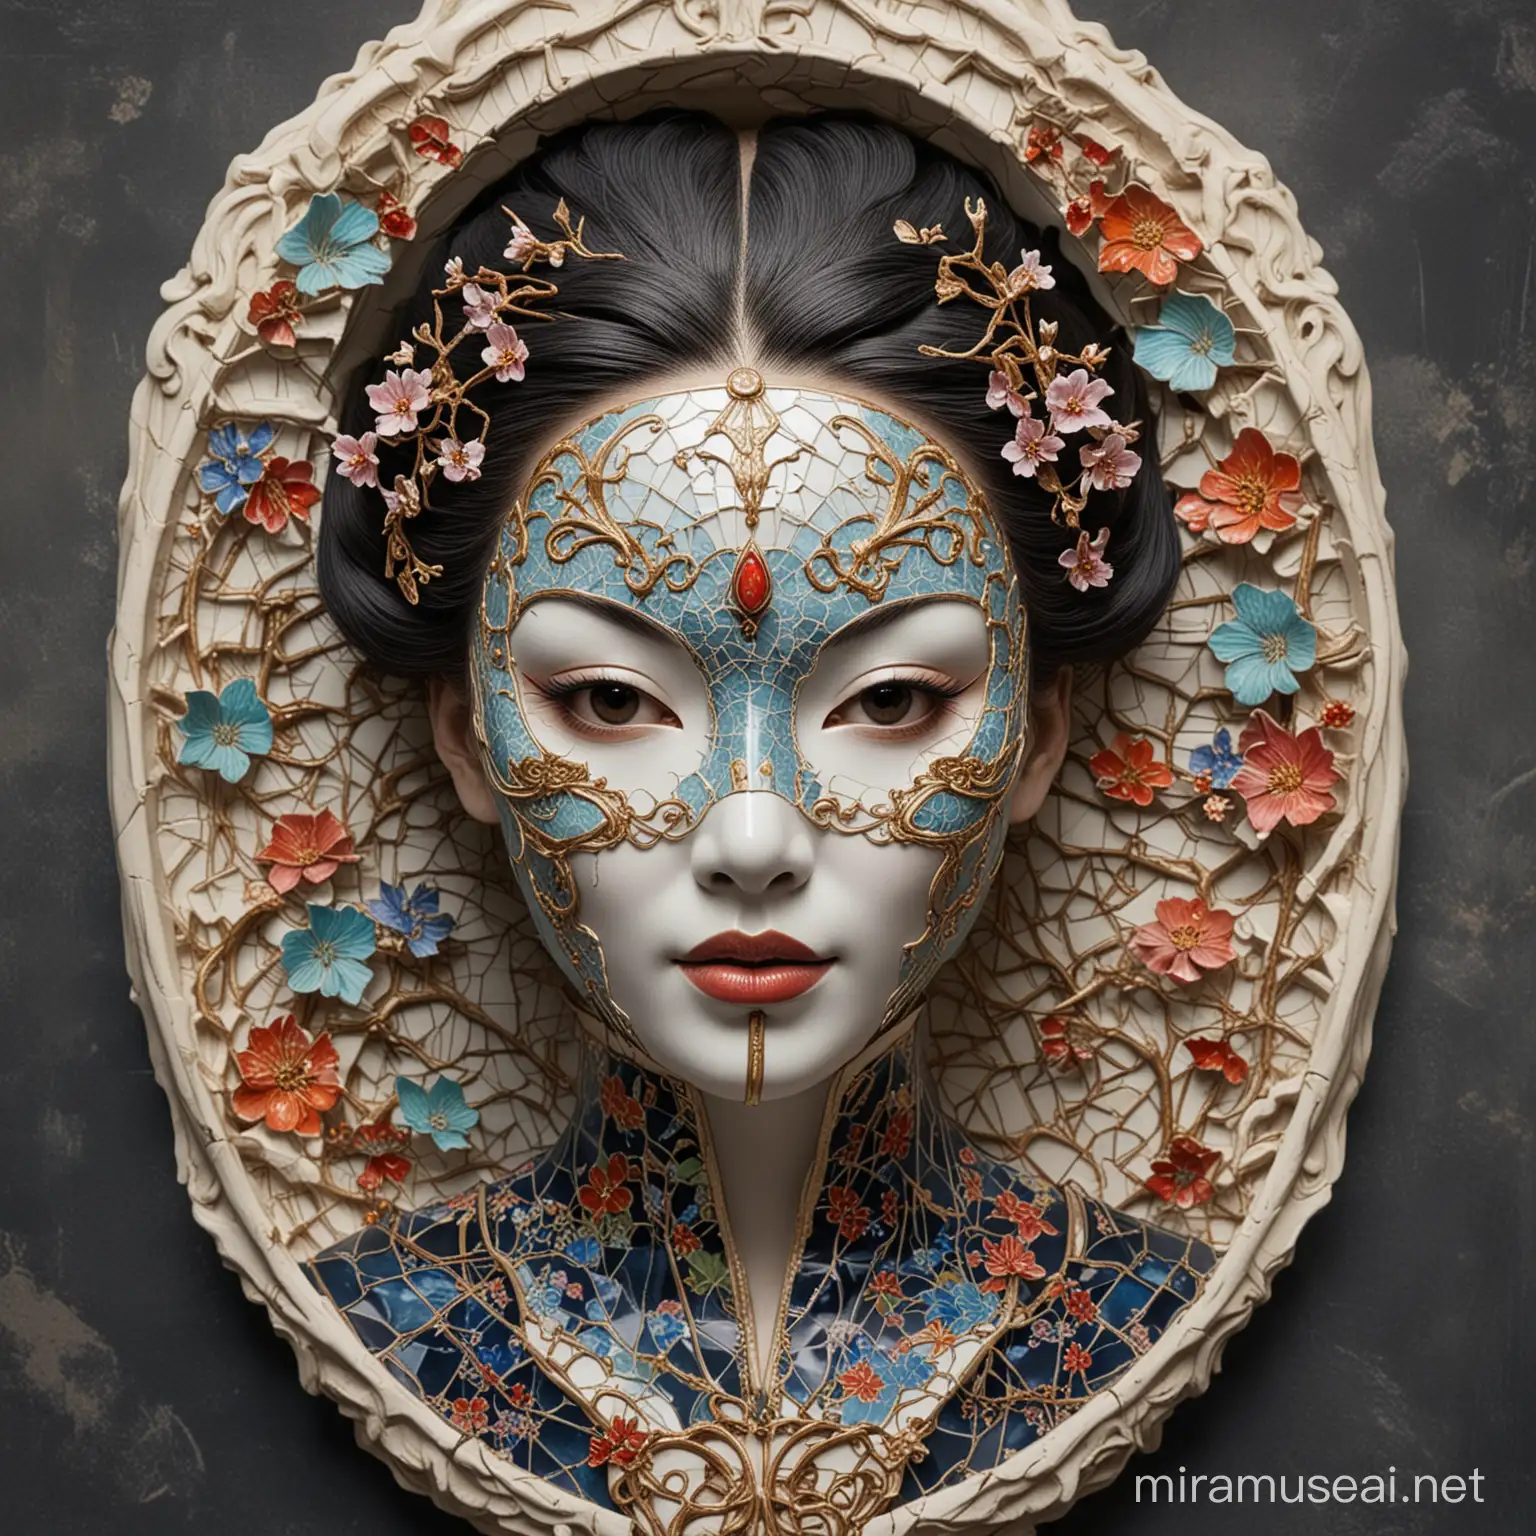 art nouveau style, japanese woman wearing cracked porcelain mask, colorful, dark mystical worlds